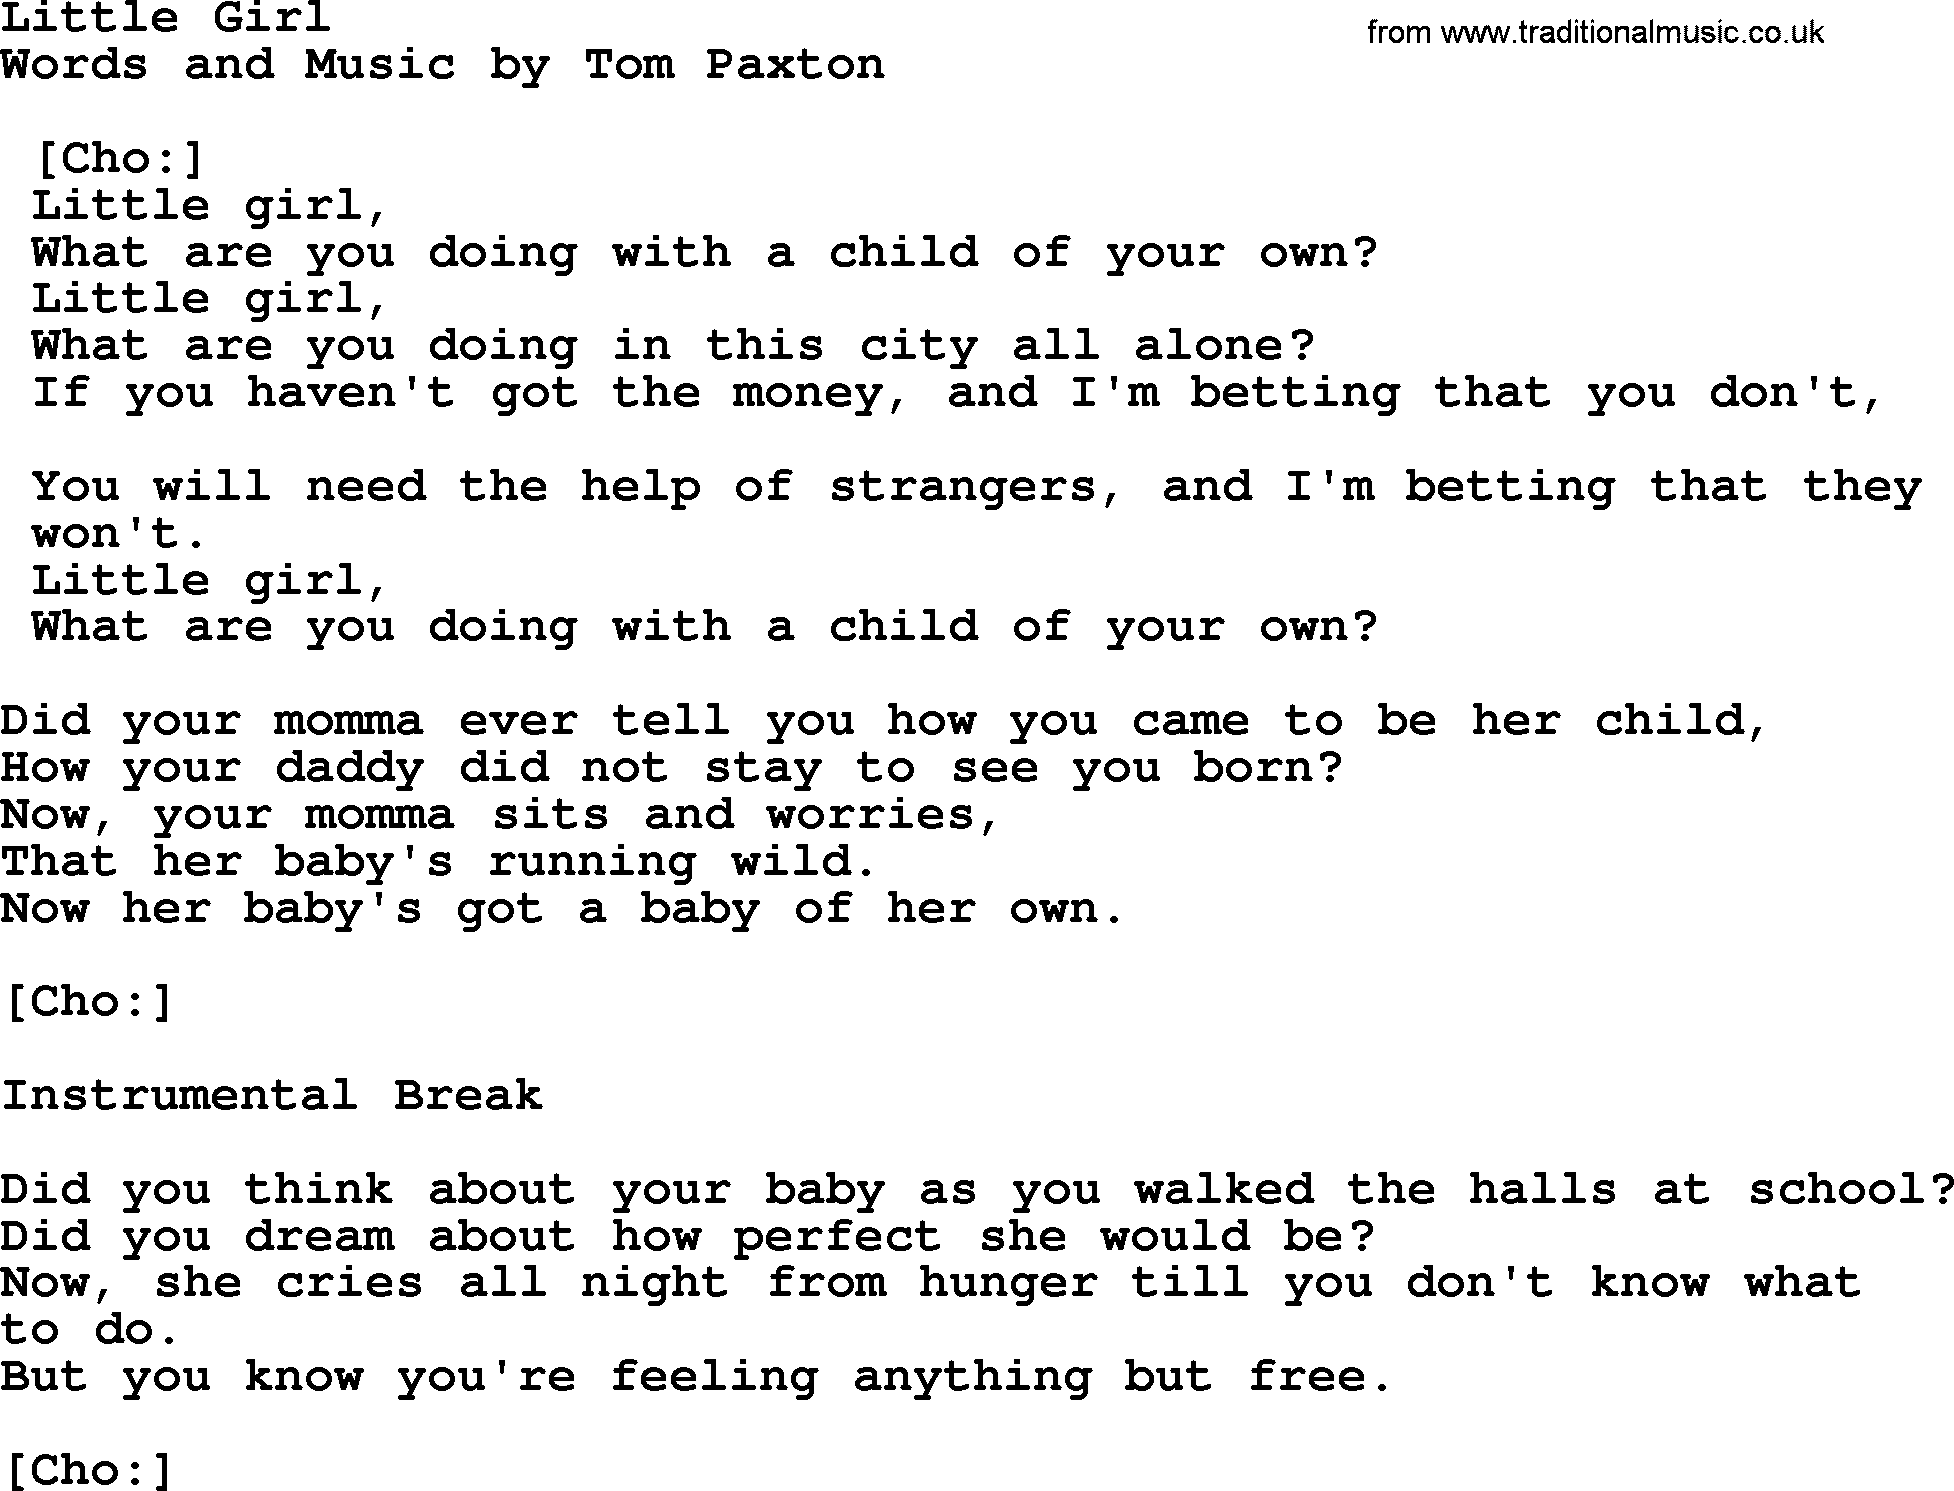 Tom Paxton song: Little Girl, lyrics